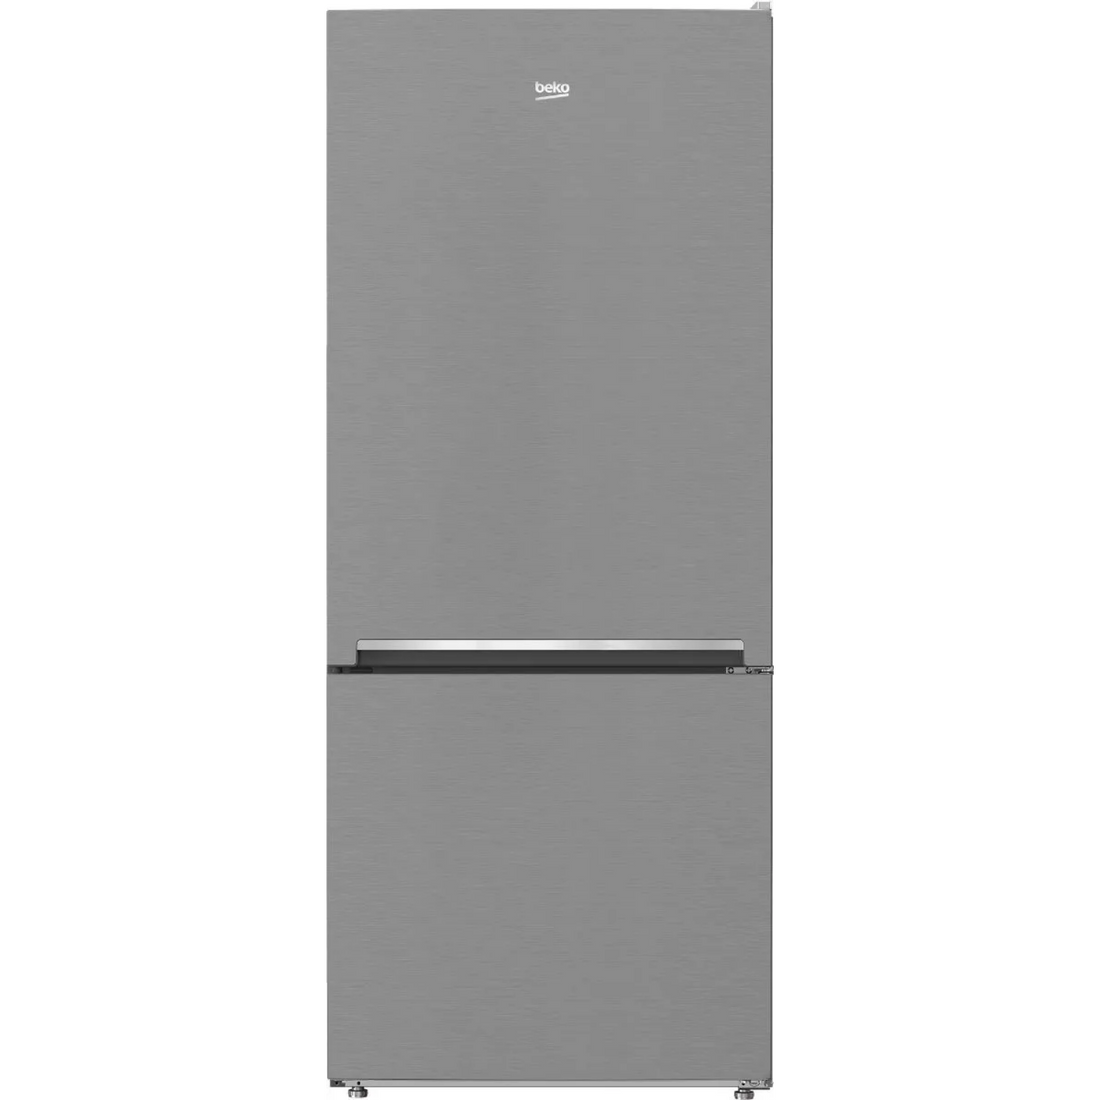 Beko 13.77 Cu. Ft. Fingerprint Free Stainless Steel Counter Depth Bottom Freezer Refrigerator